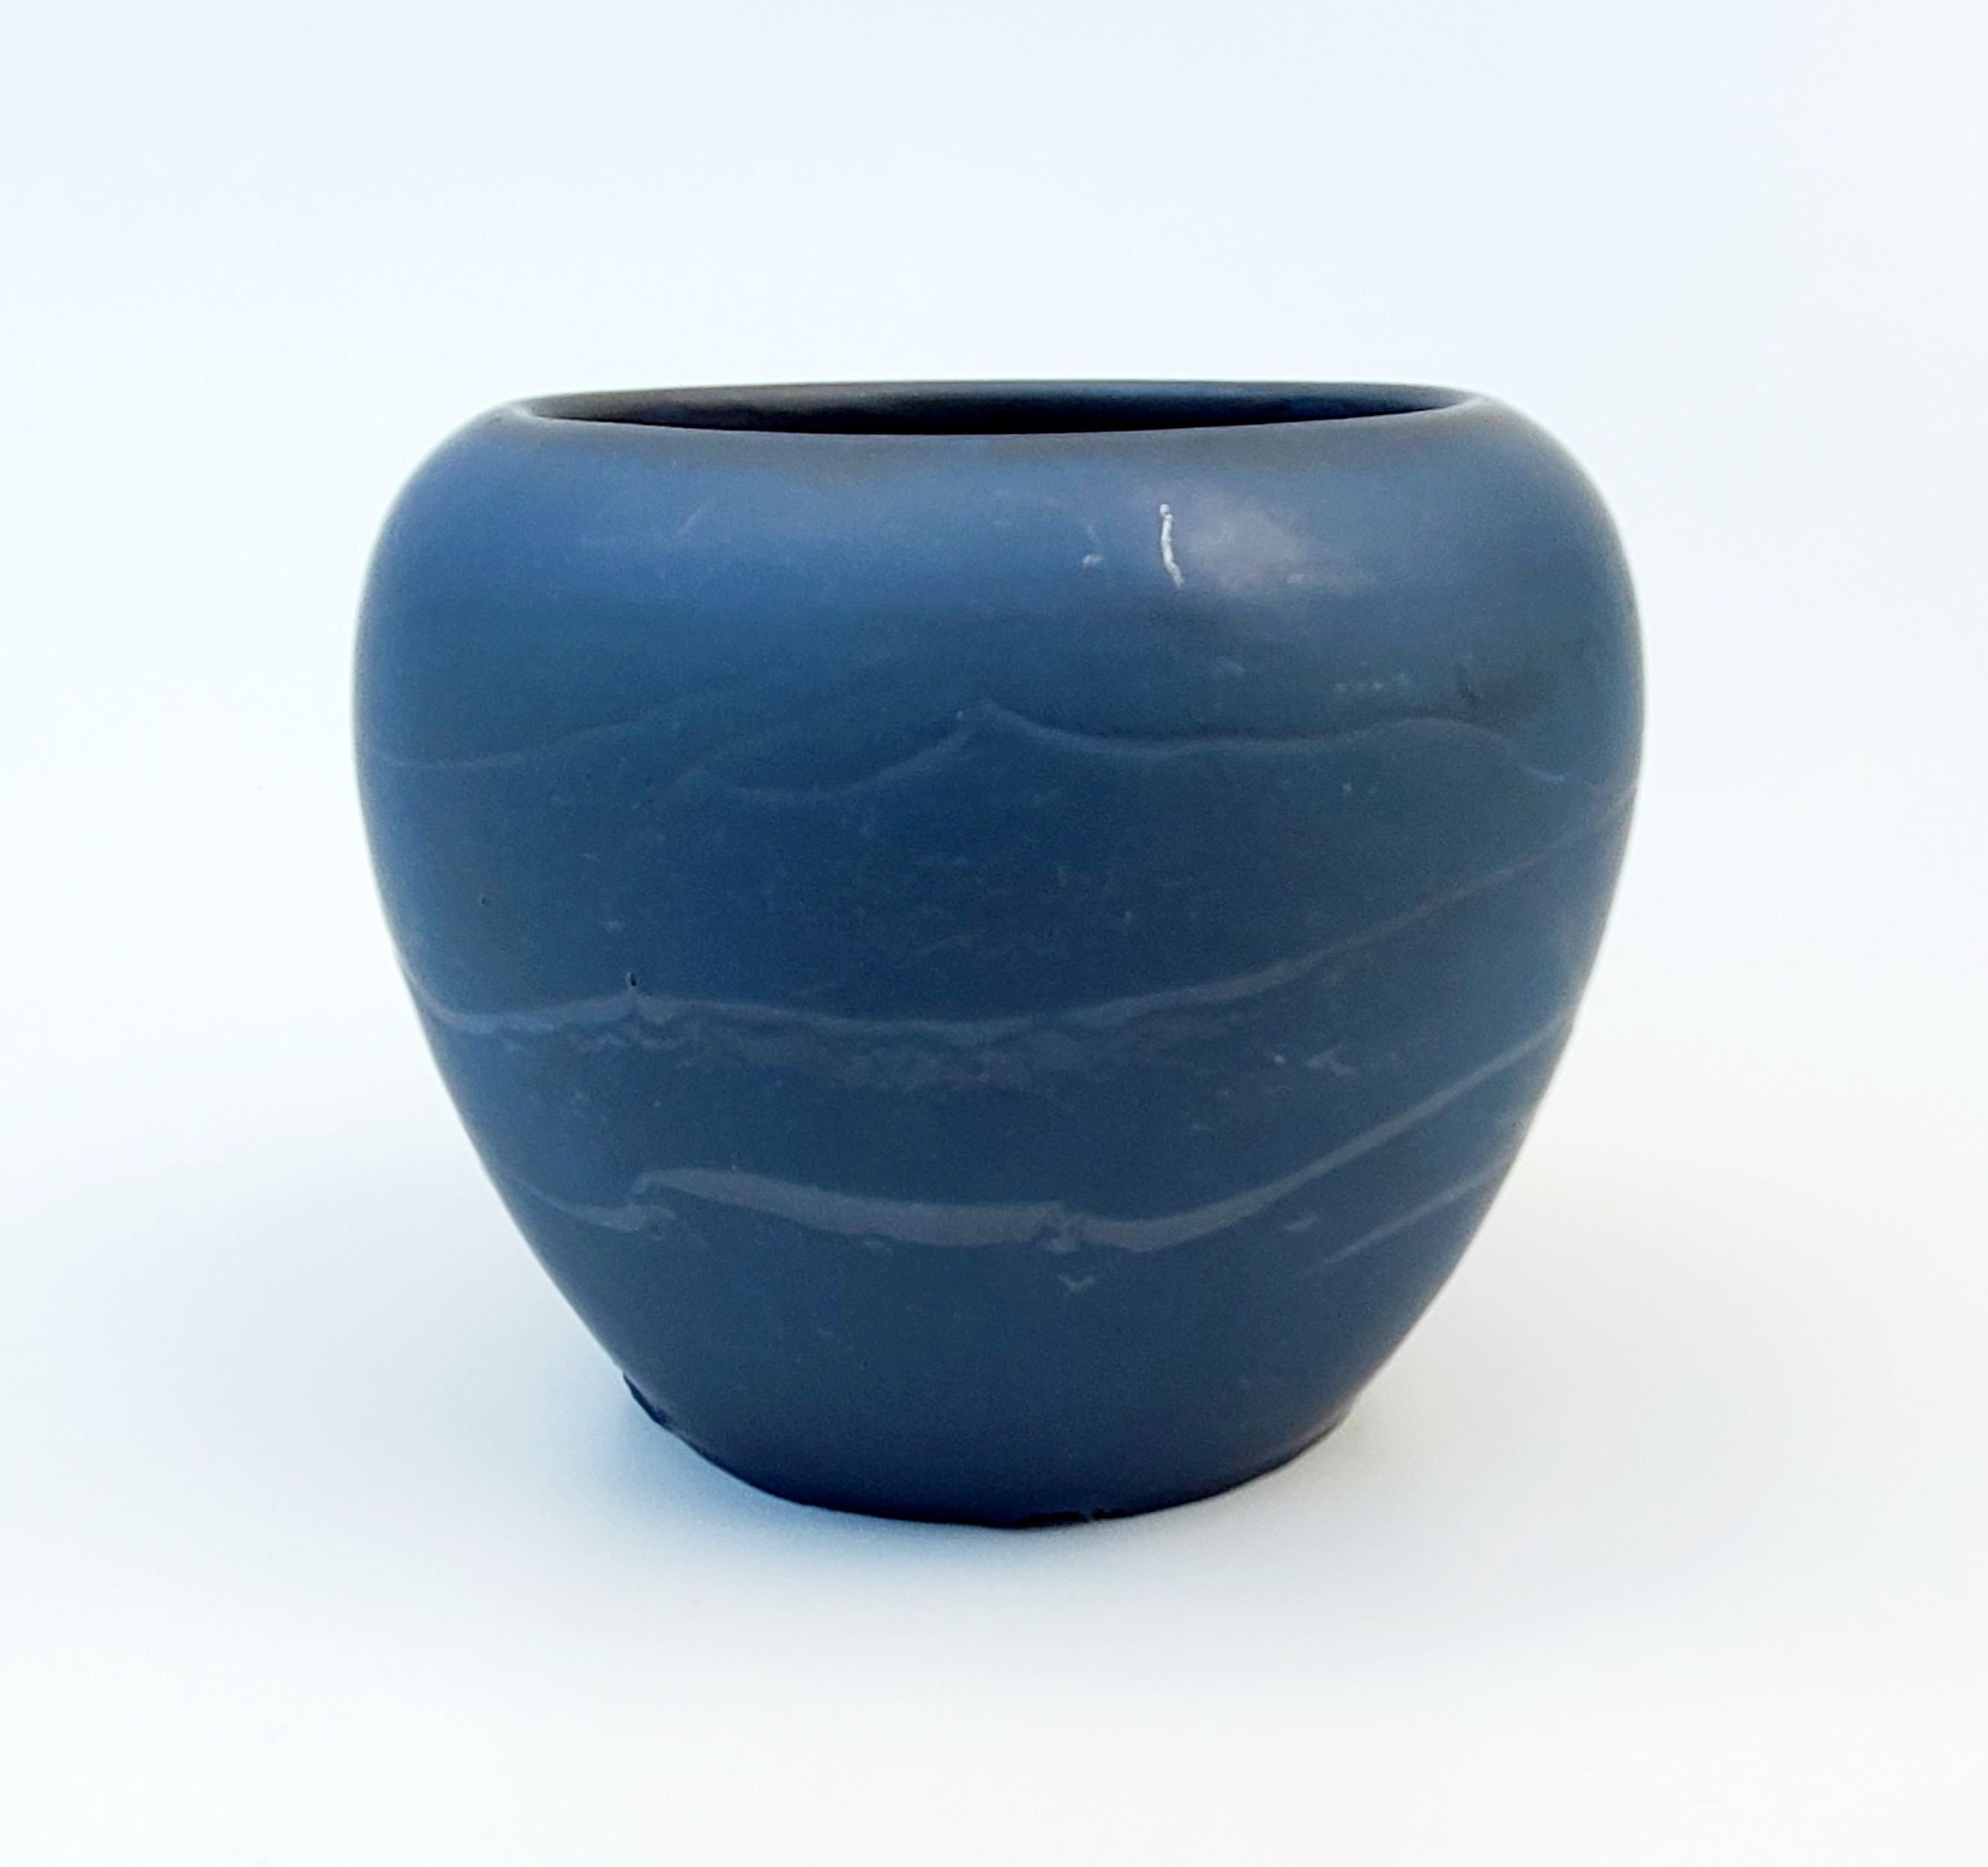 Impresa [9 pack] pottery sponge - 3 sets of 3 densities - art